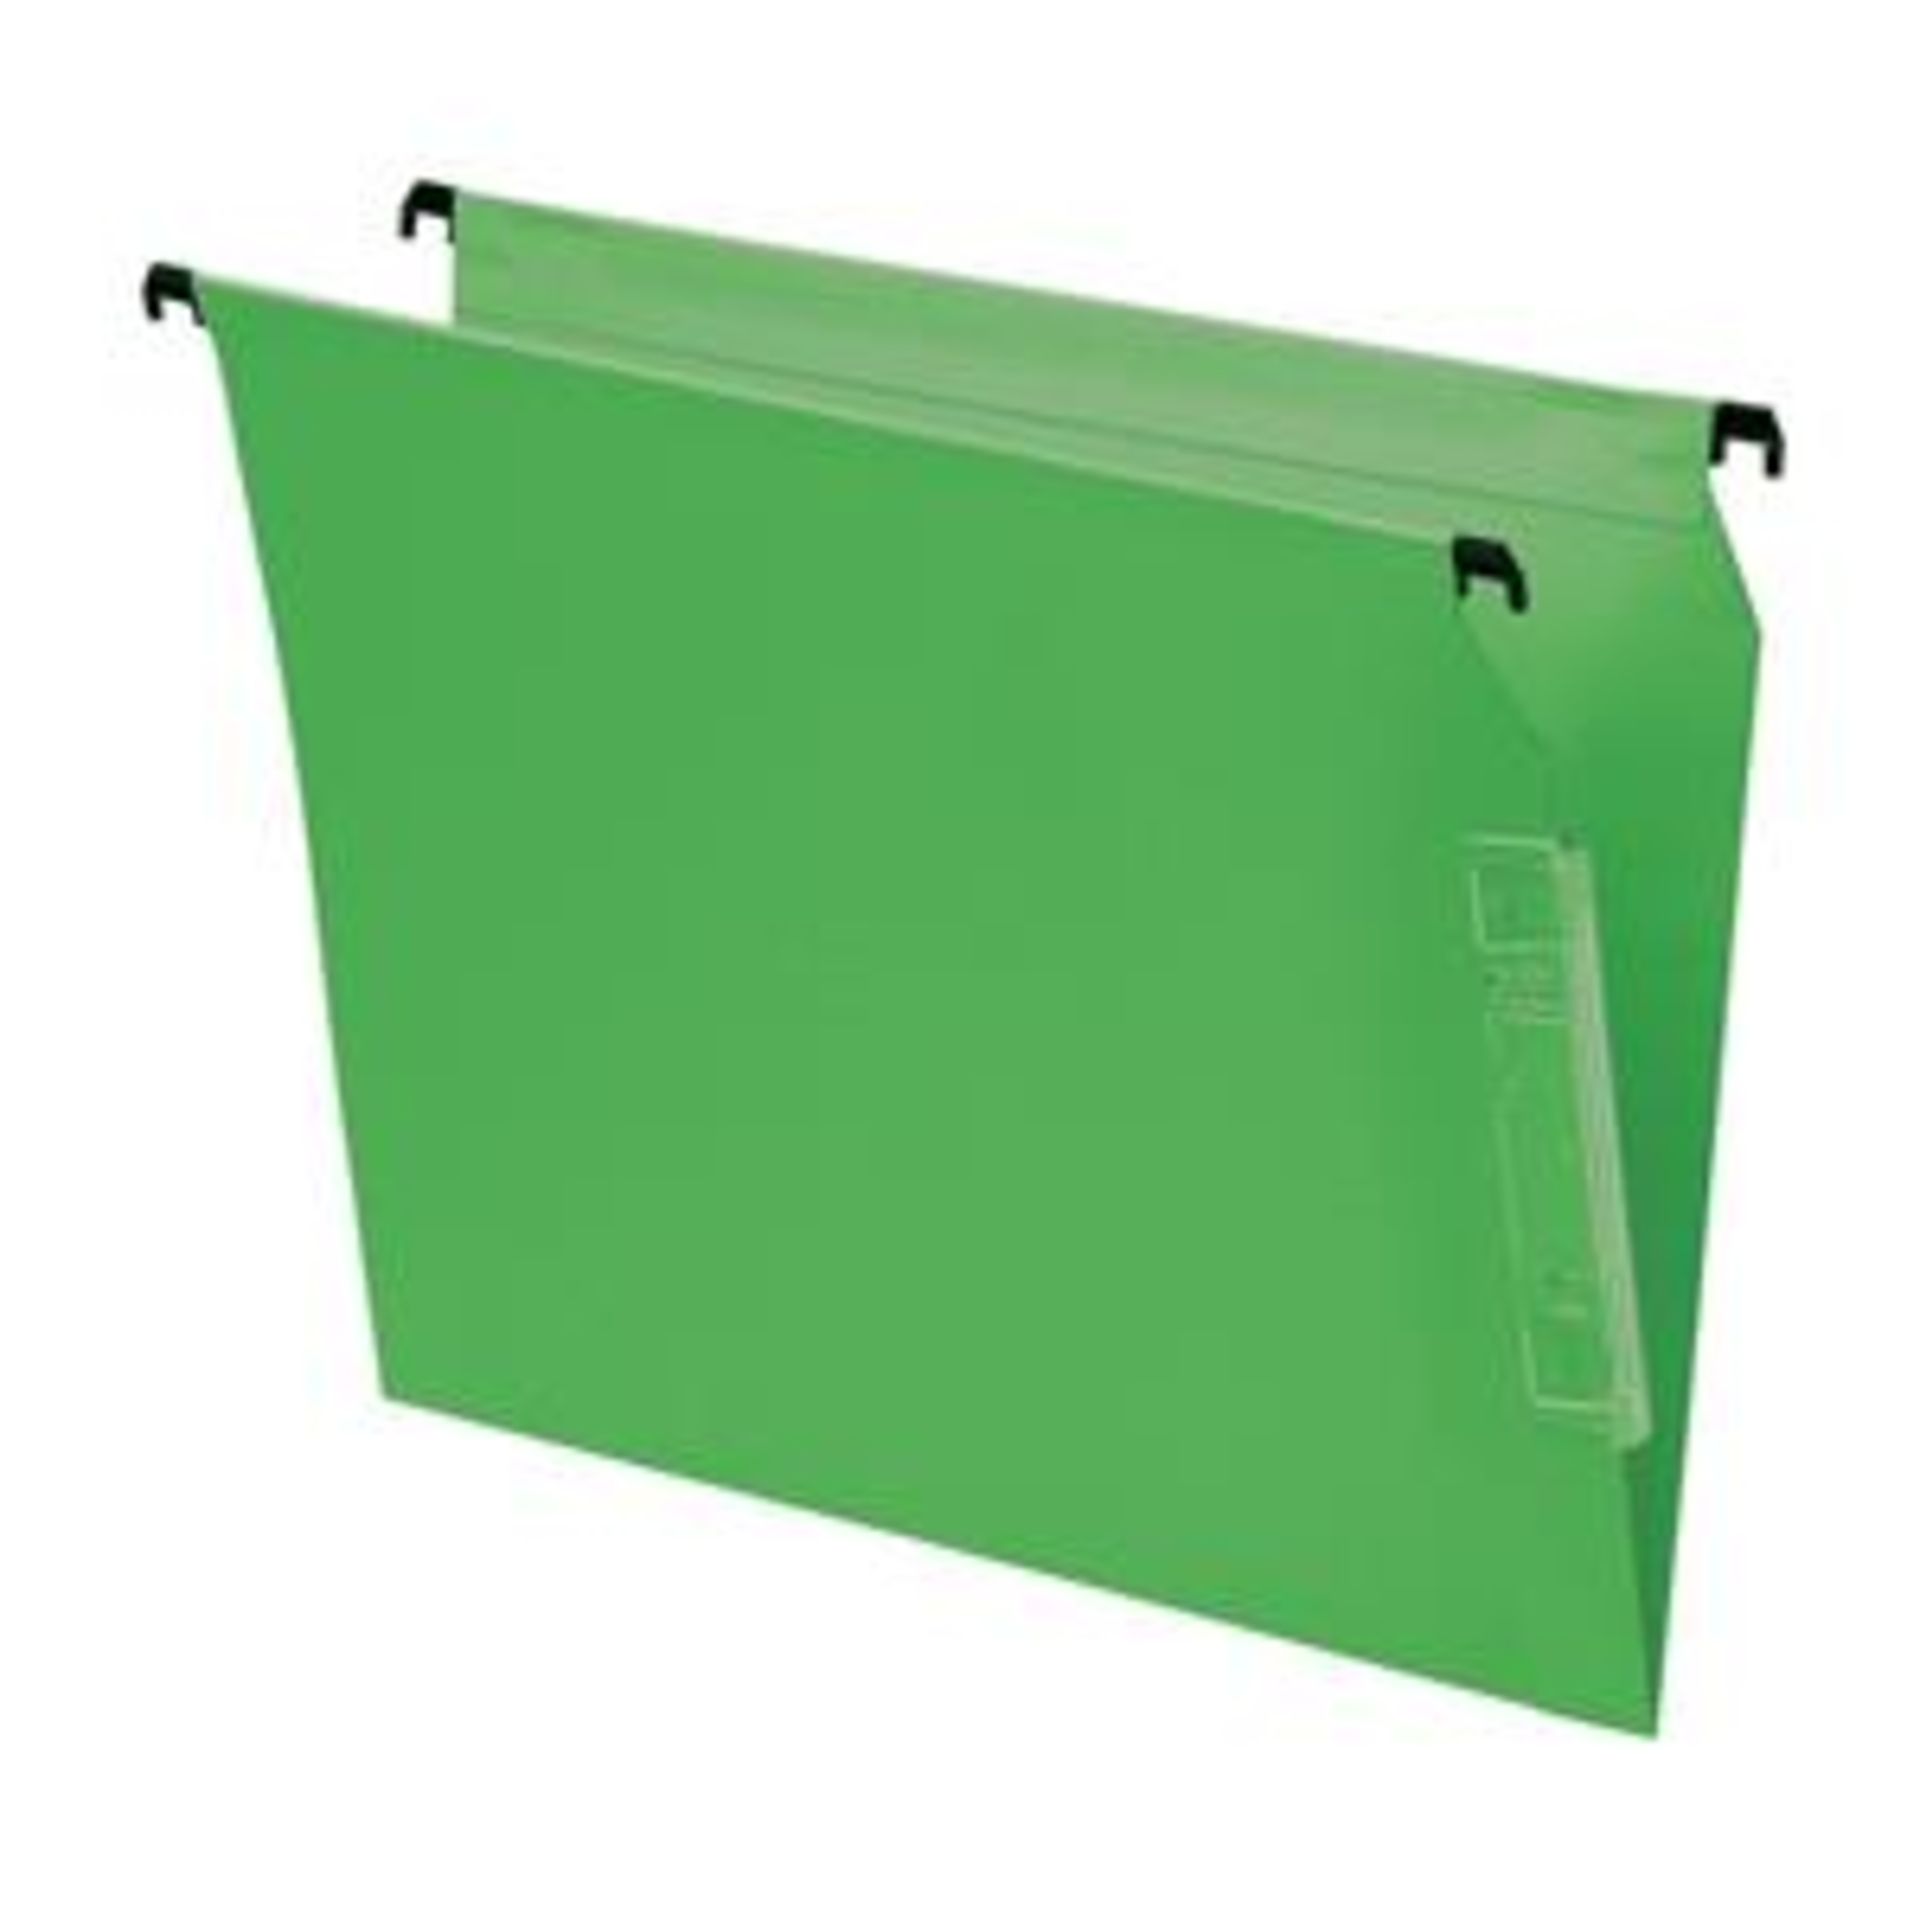 V *TRADE QTY* Brand New Box 25 Esselte A4 Dual Suspension Files Green ISP £34.22 (Puretek) X 4